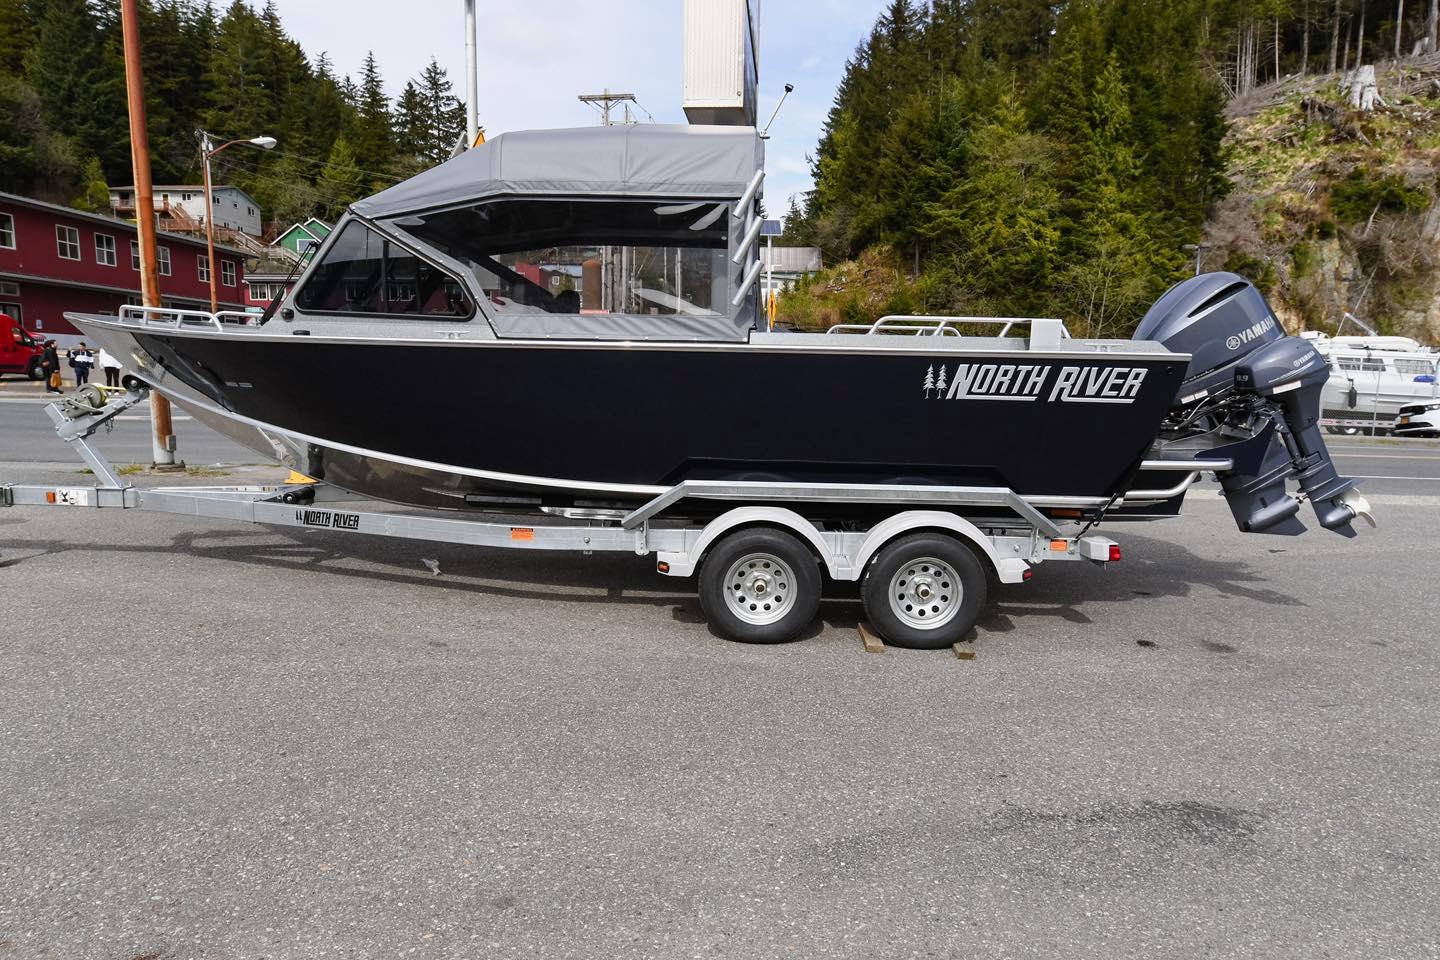 Explore North River Seahawk 22 Boats For Sale - Boat Trader